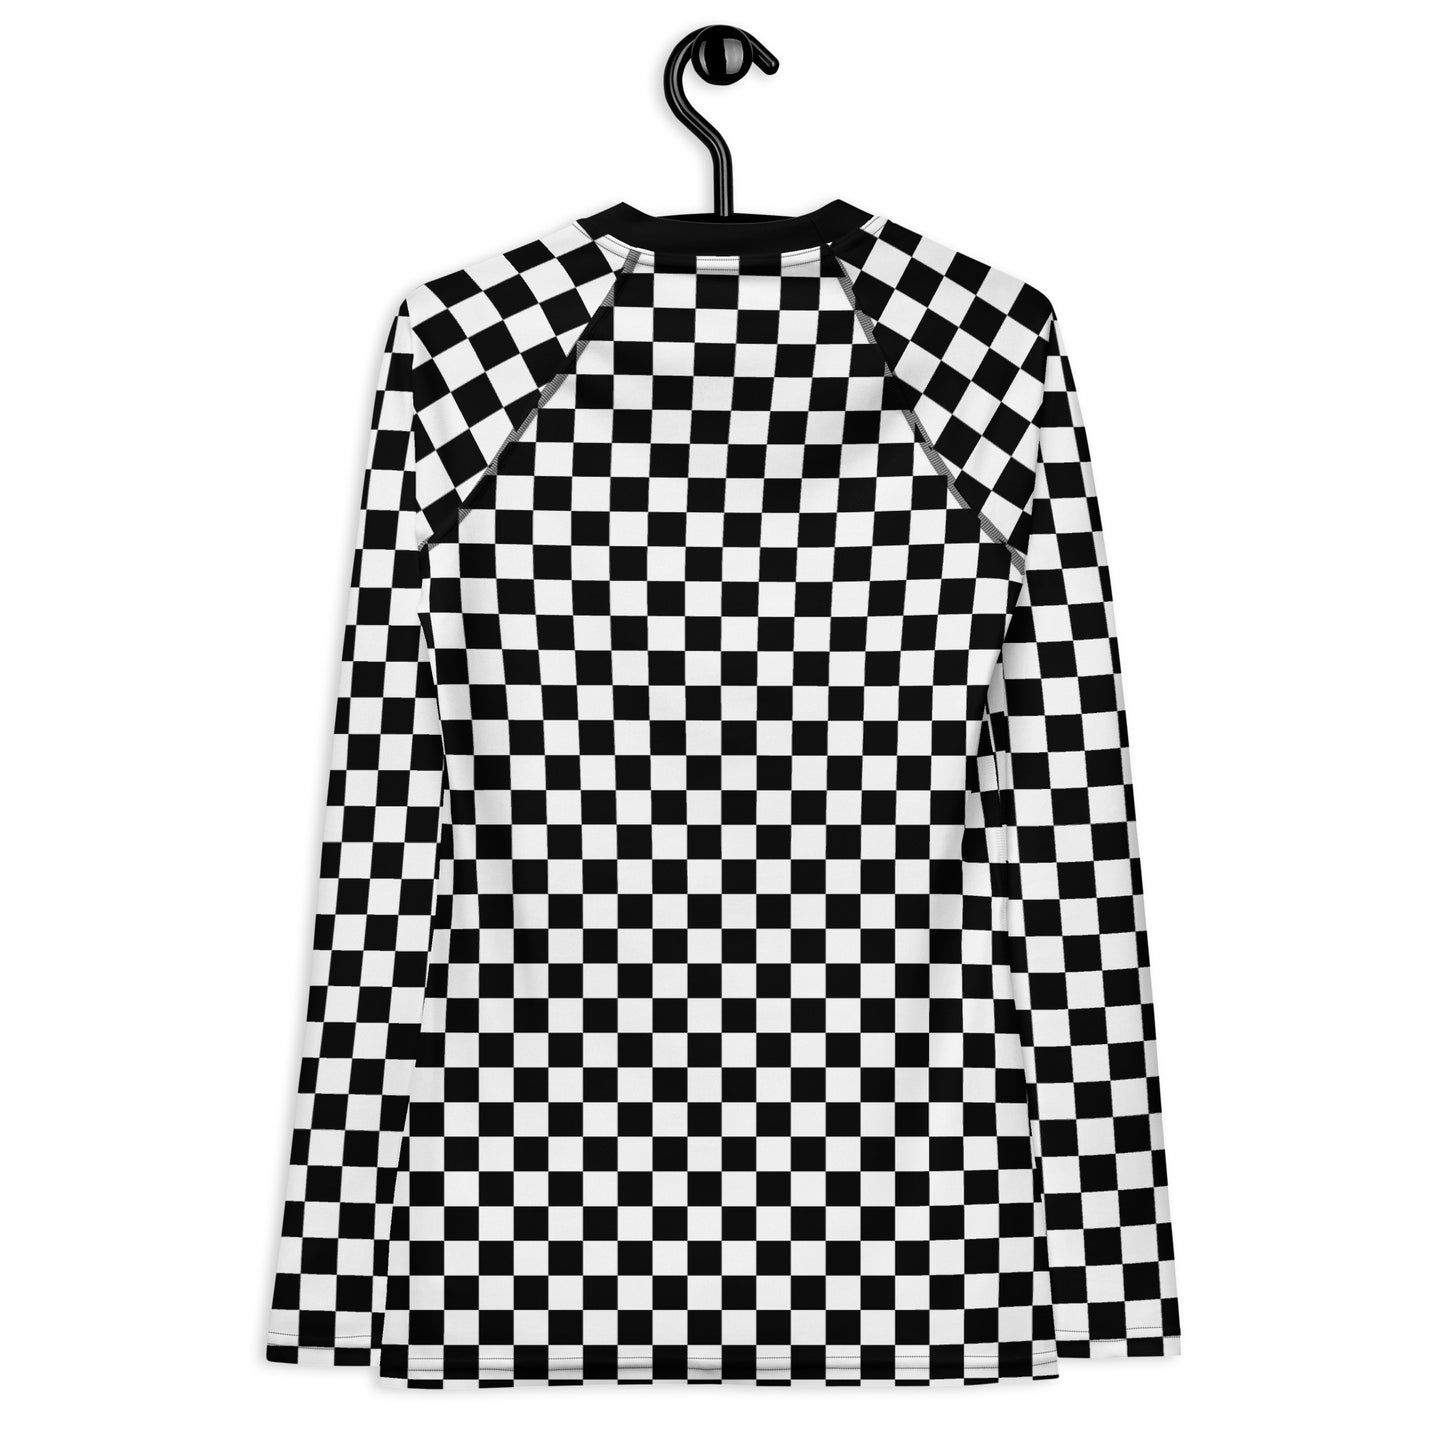 Checkered Women's Rash Guard, Black White Check Print Surf Long Sleeve Swim Shirt Swimwear Sun Protection Jiu Jitsu Wet Suit UPF Cover Starcove Fashion